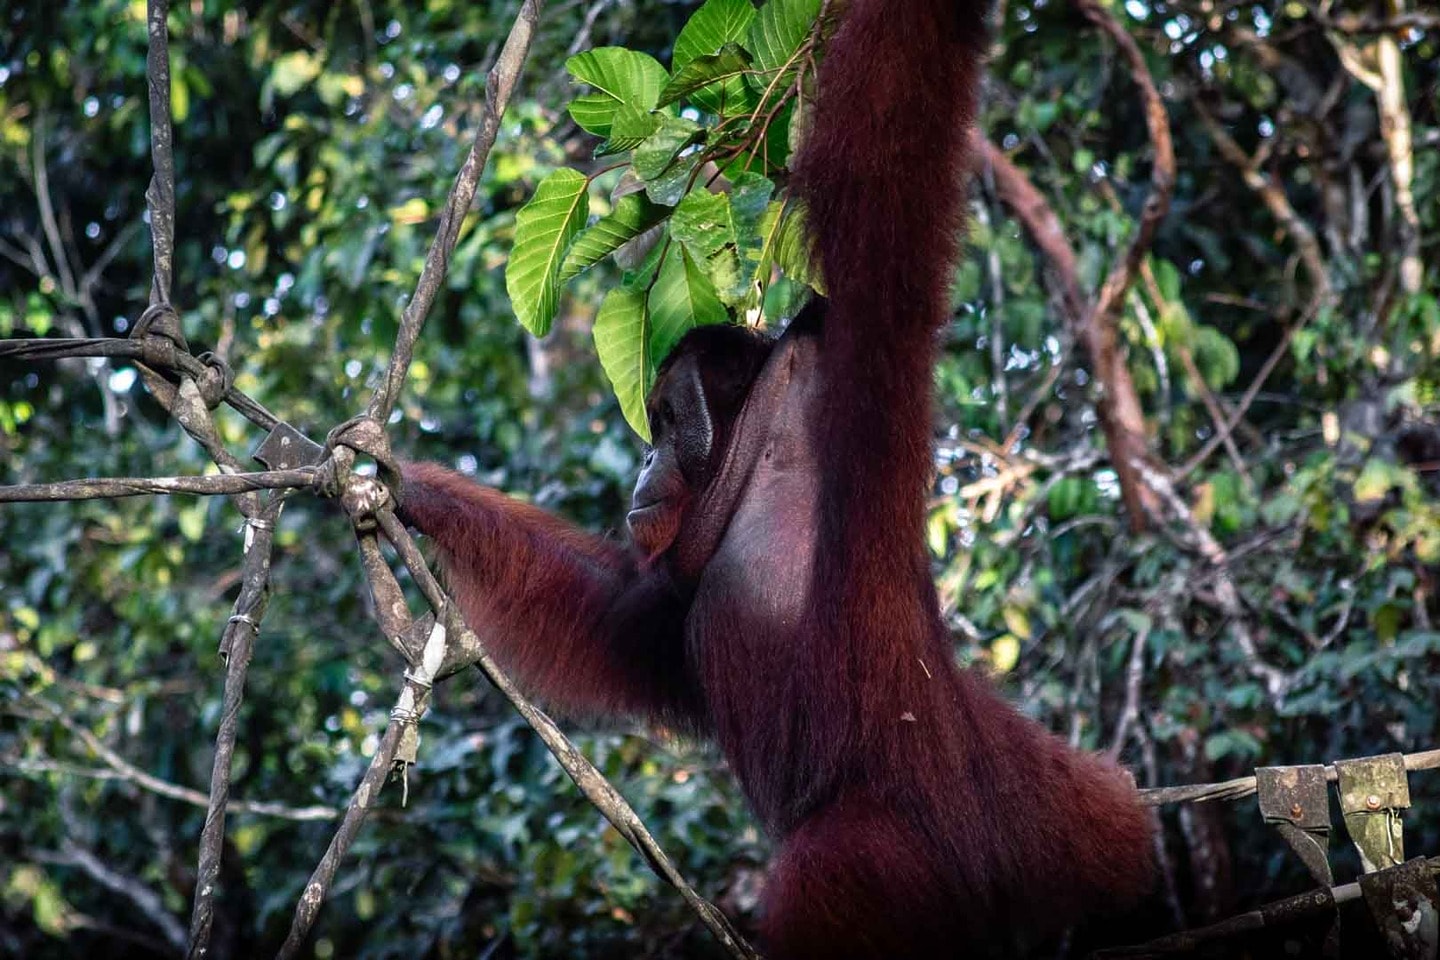 Wild orangutan in Borneo, National parks in Asia